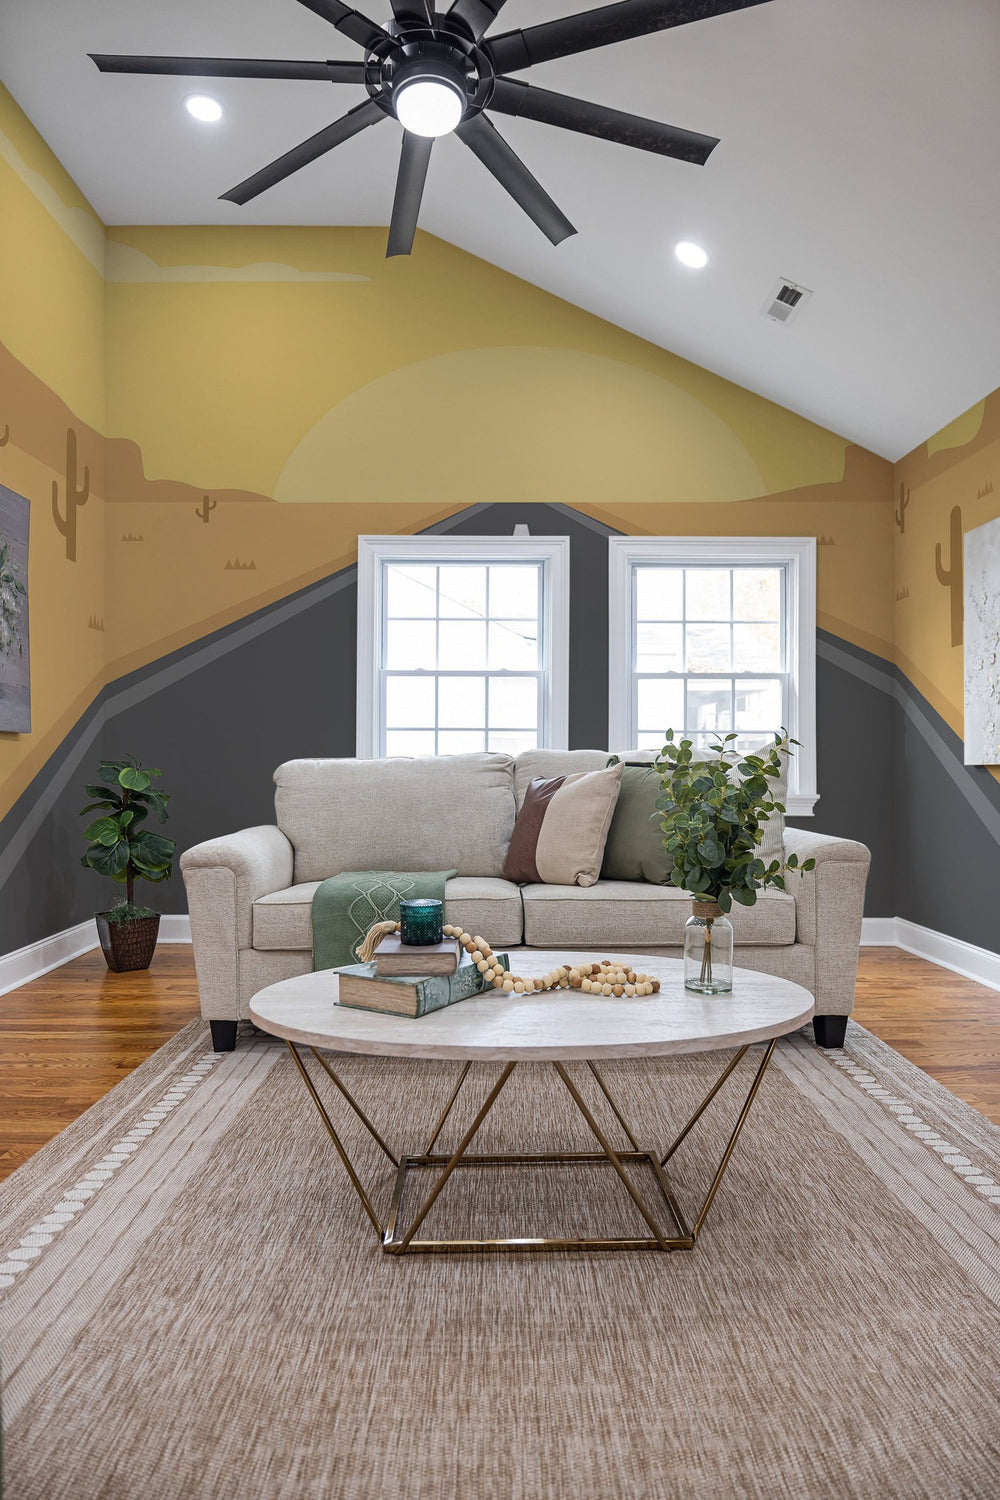 Elegant living room interior with yellow and gray wall mural, comfortable sofa, glass coffee table, and houseplants